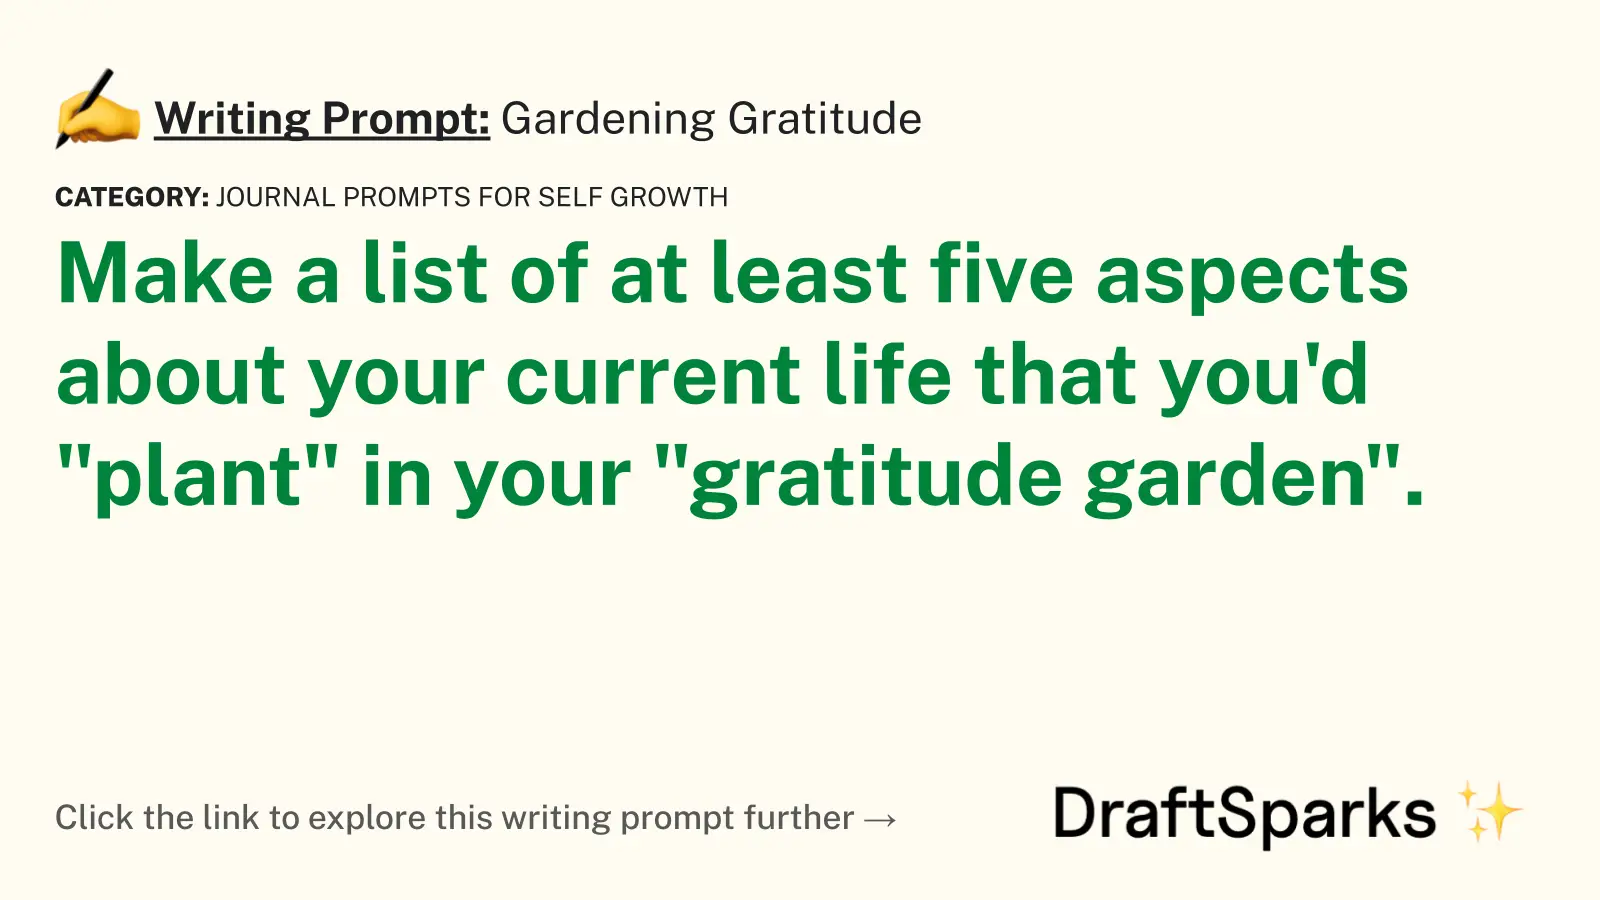 Gardening Gratitude